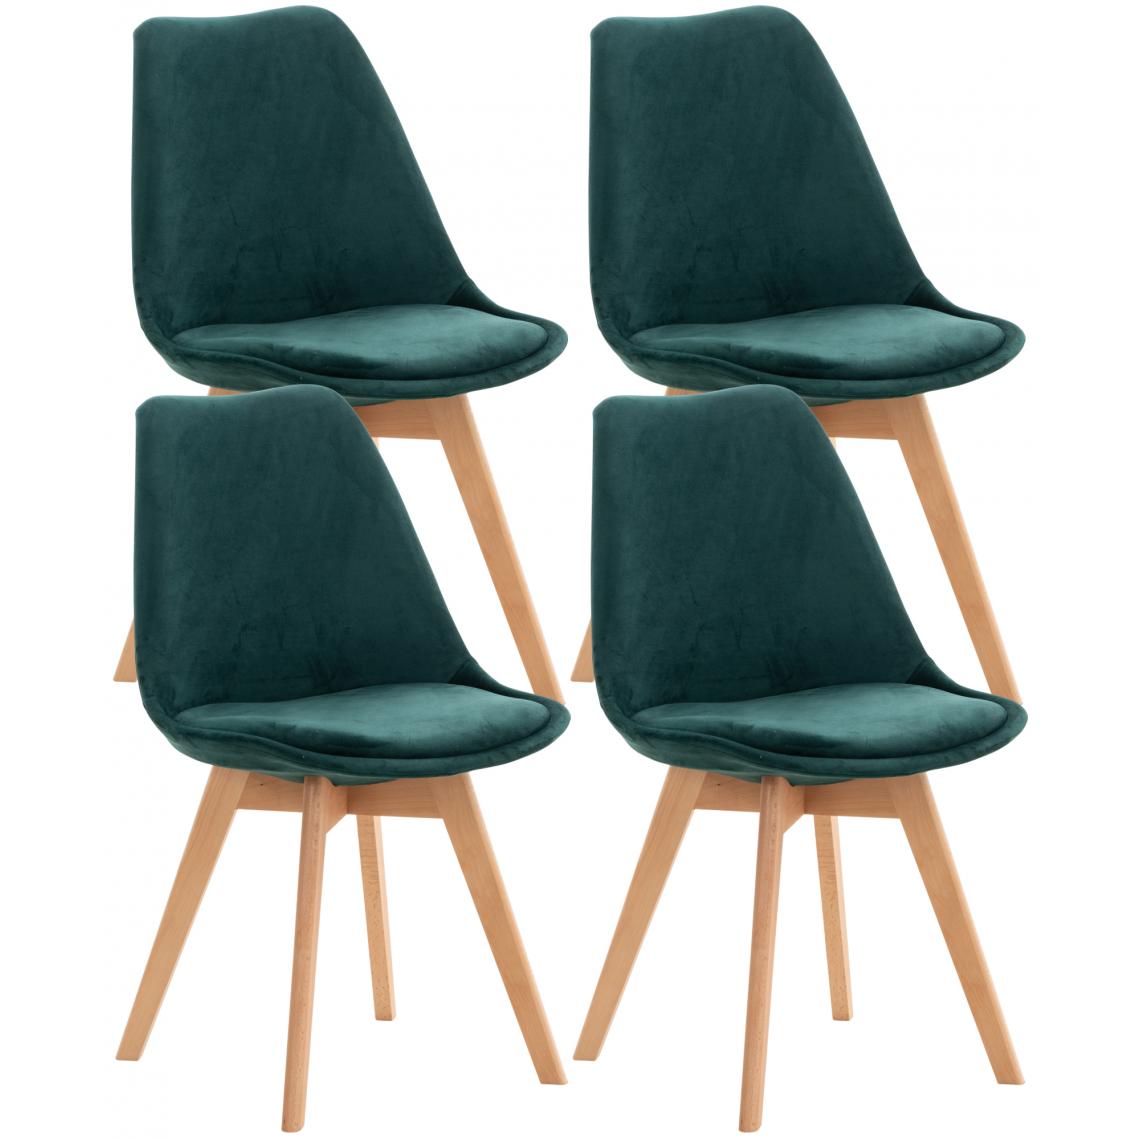 Icaverne - Superbe Lot de 4 chaises reference Oulan-Bator velours couleur vert - Tabourets